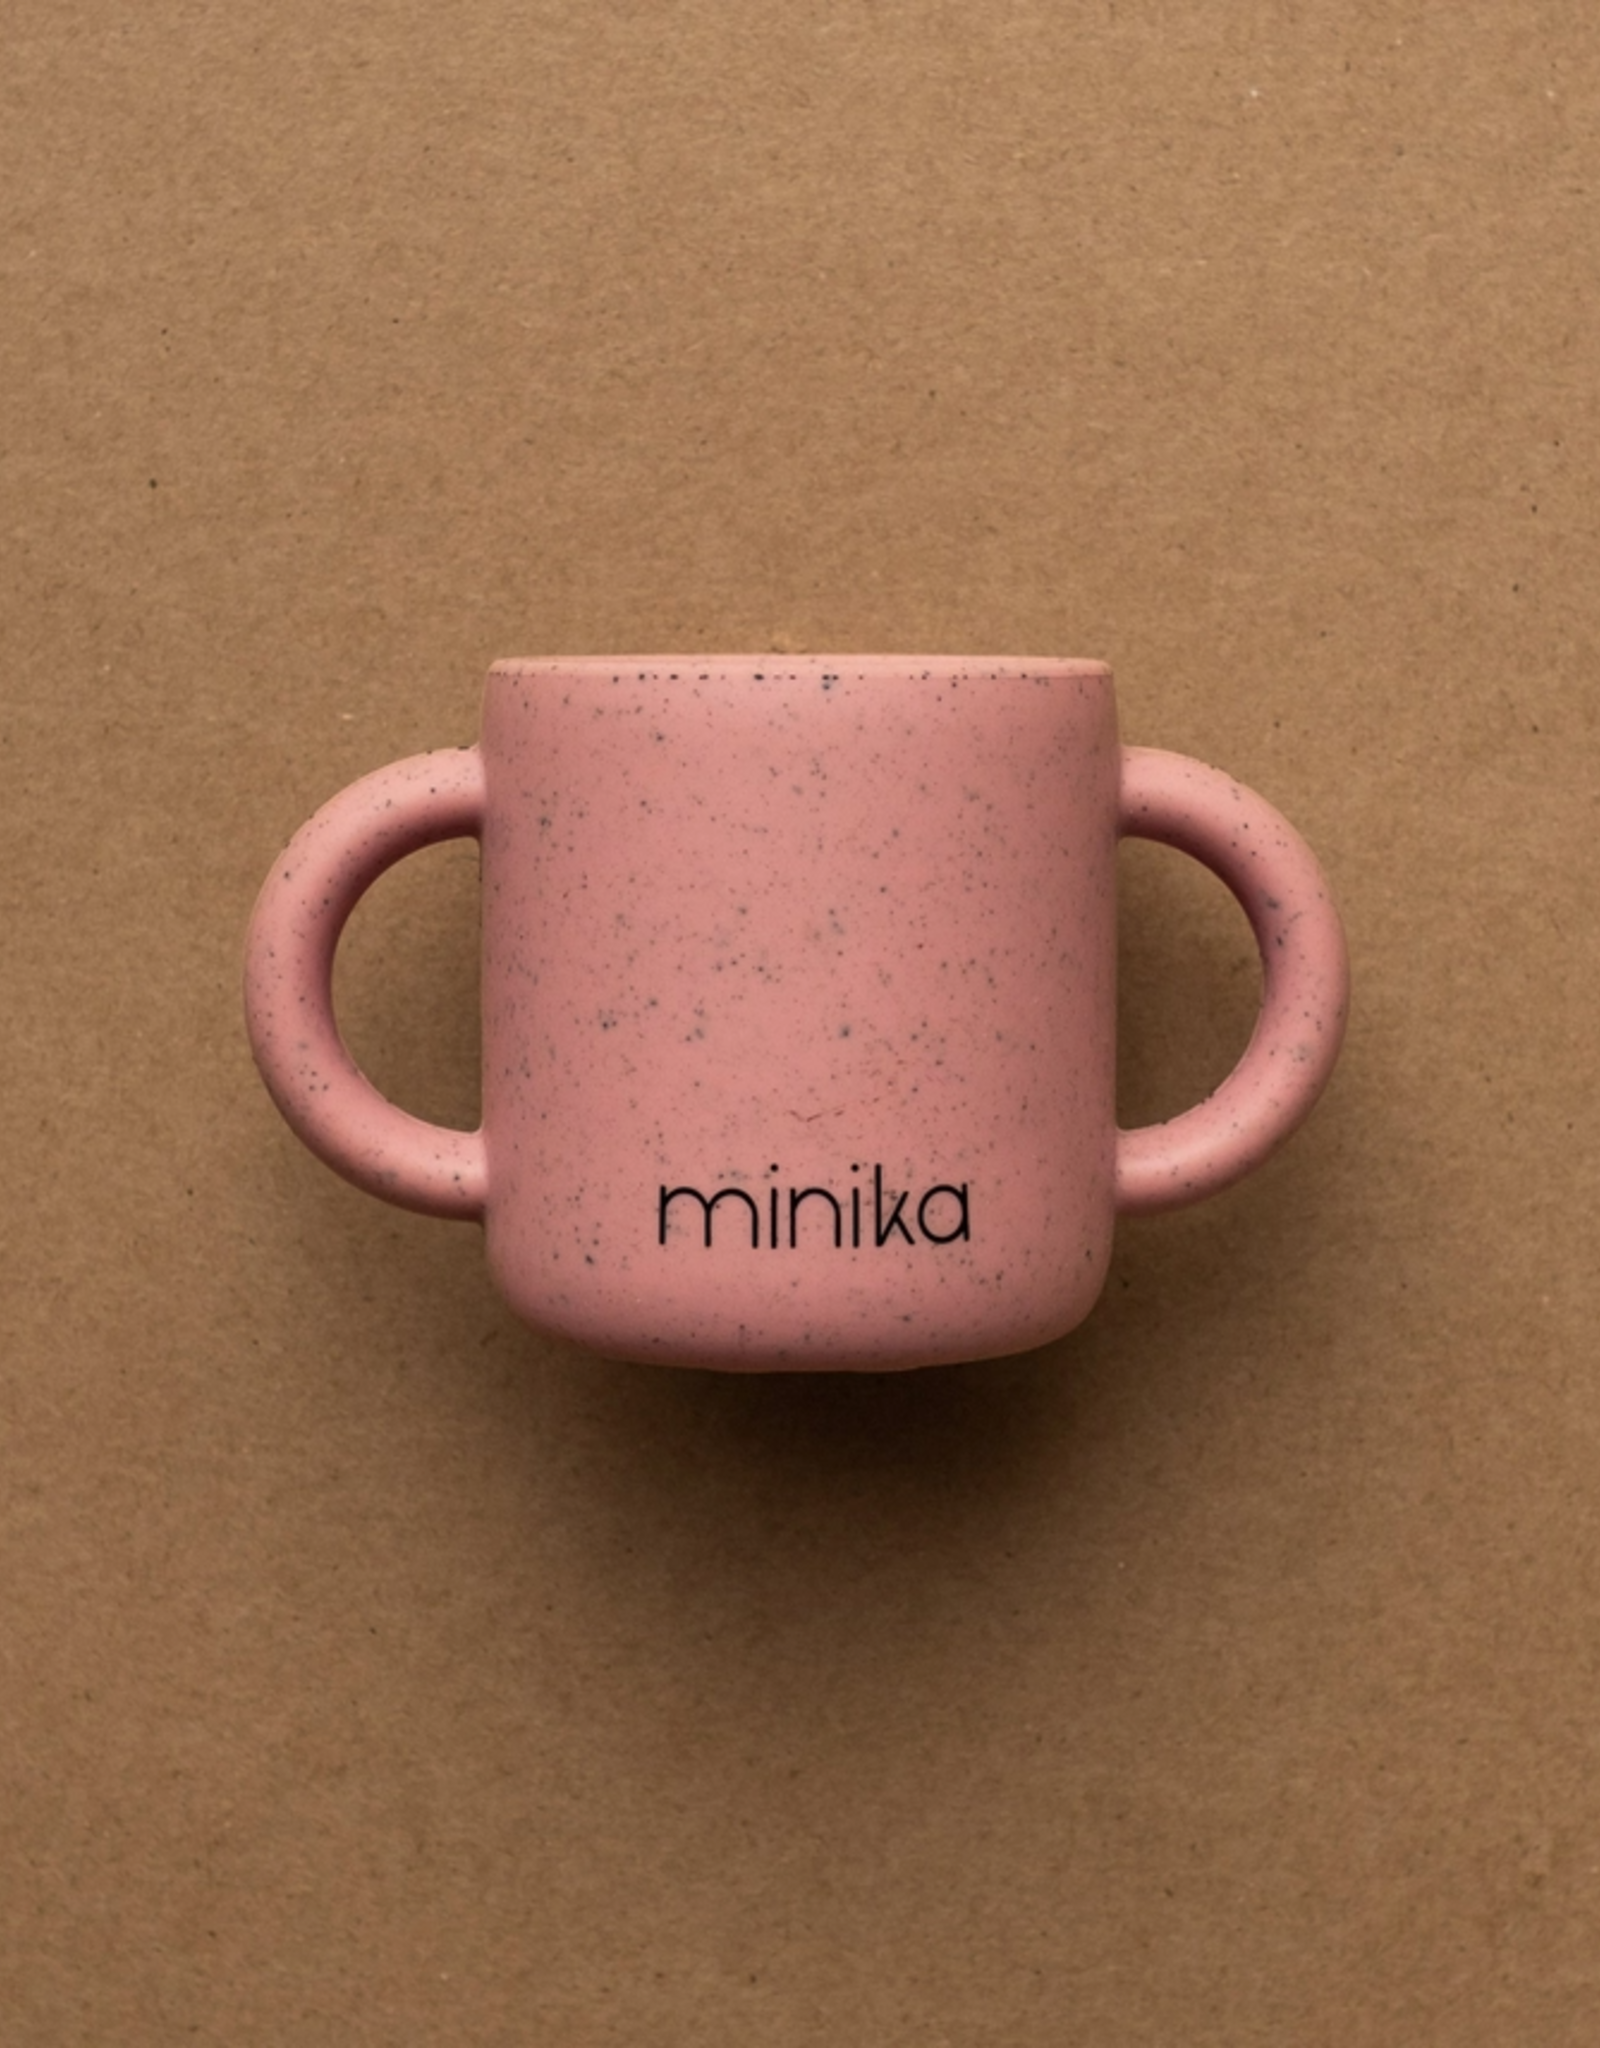 Minika Learning Cup w/Handles, Sorbet